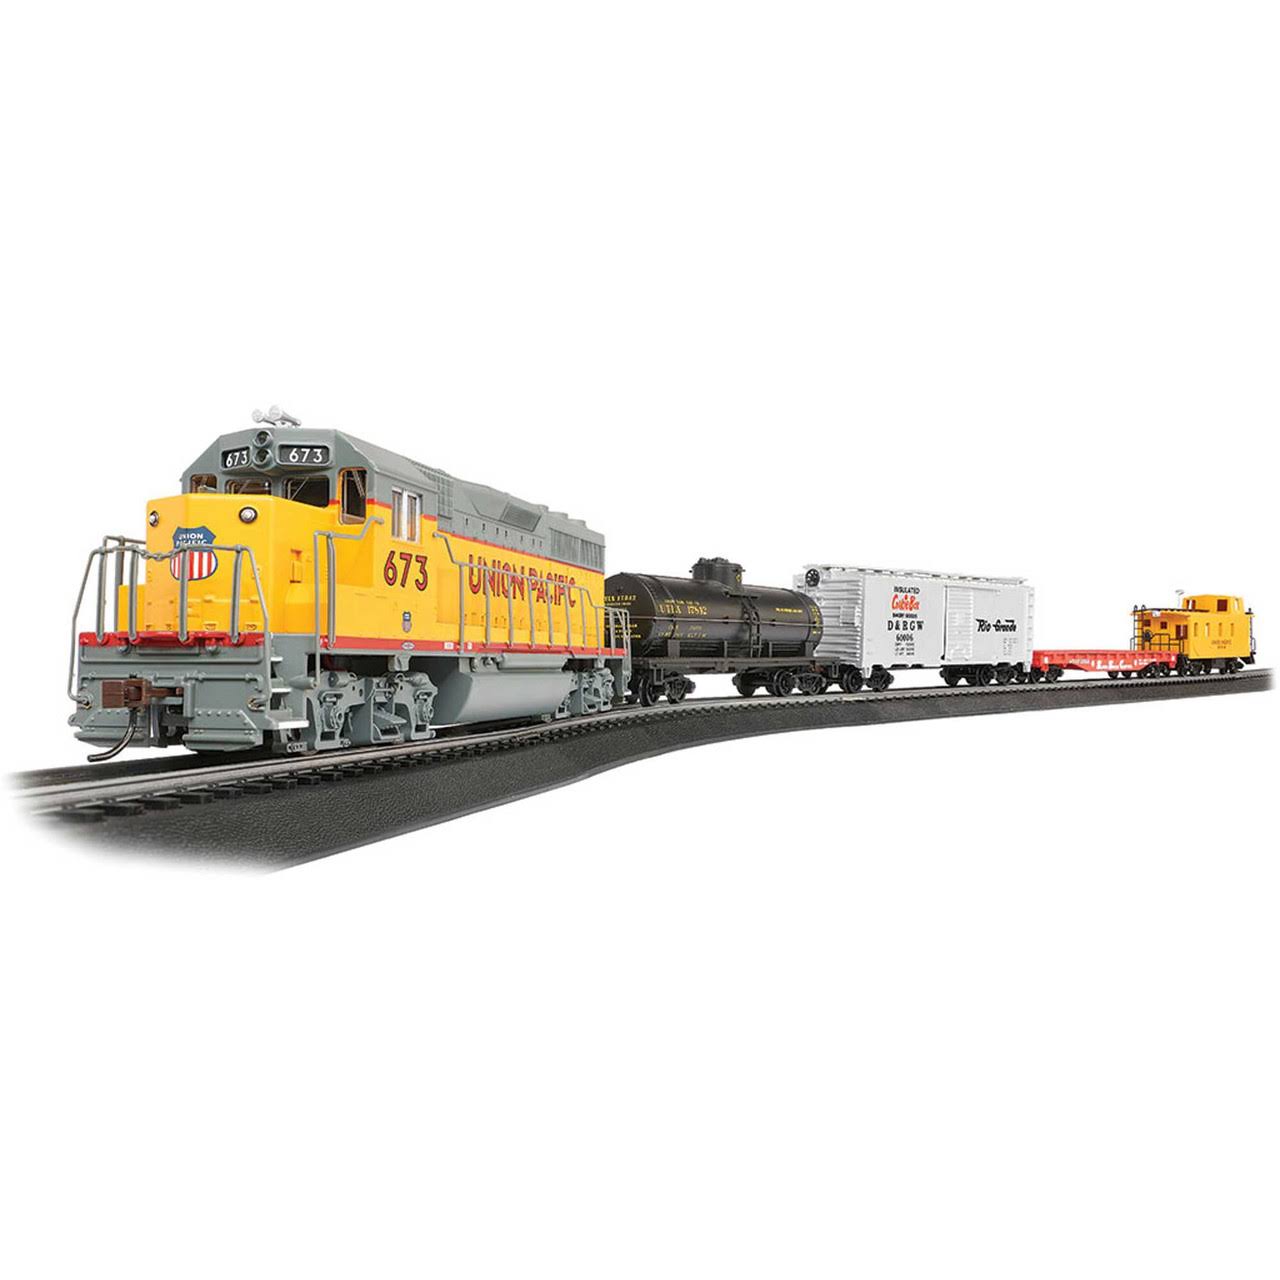 Bachmann Trains - Track King Ready to Run Electric Train Set - Ho Scale 00766